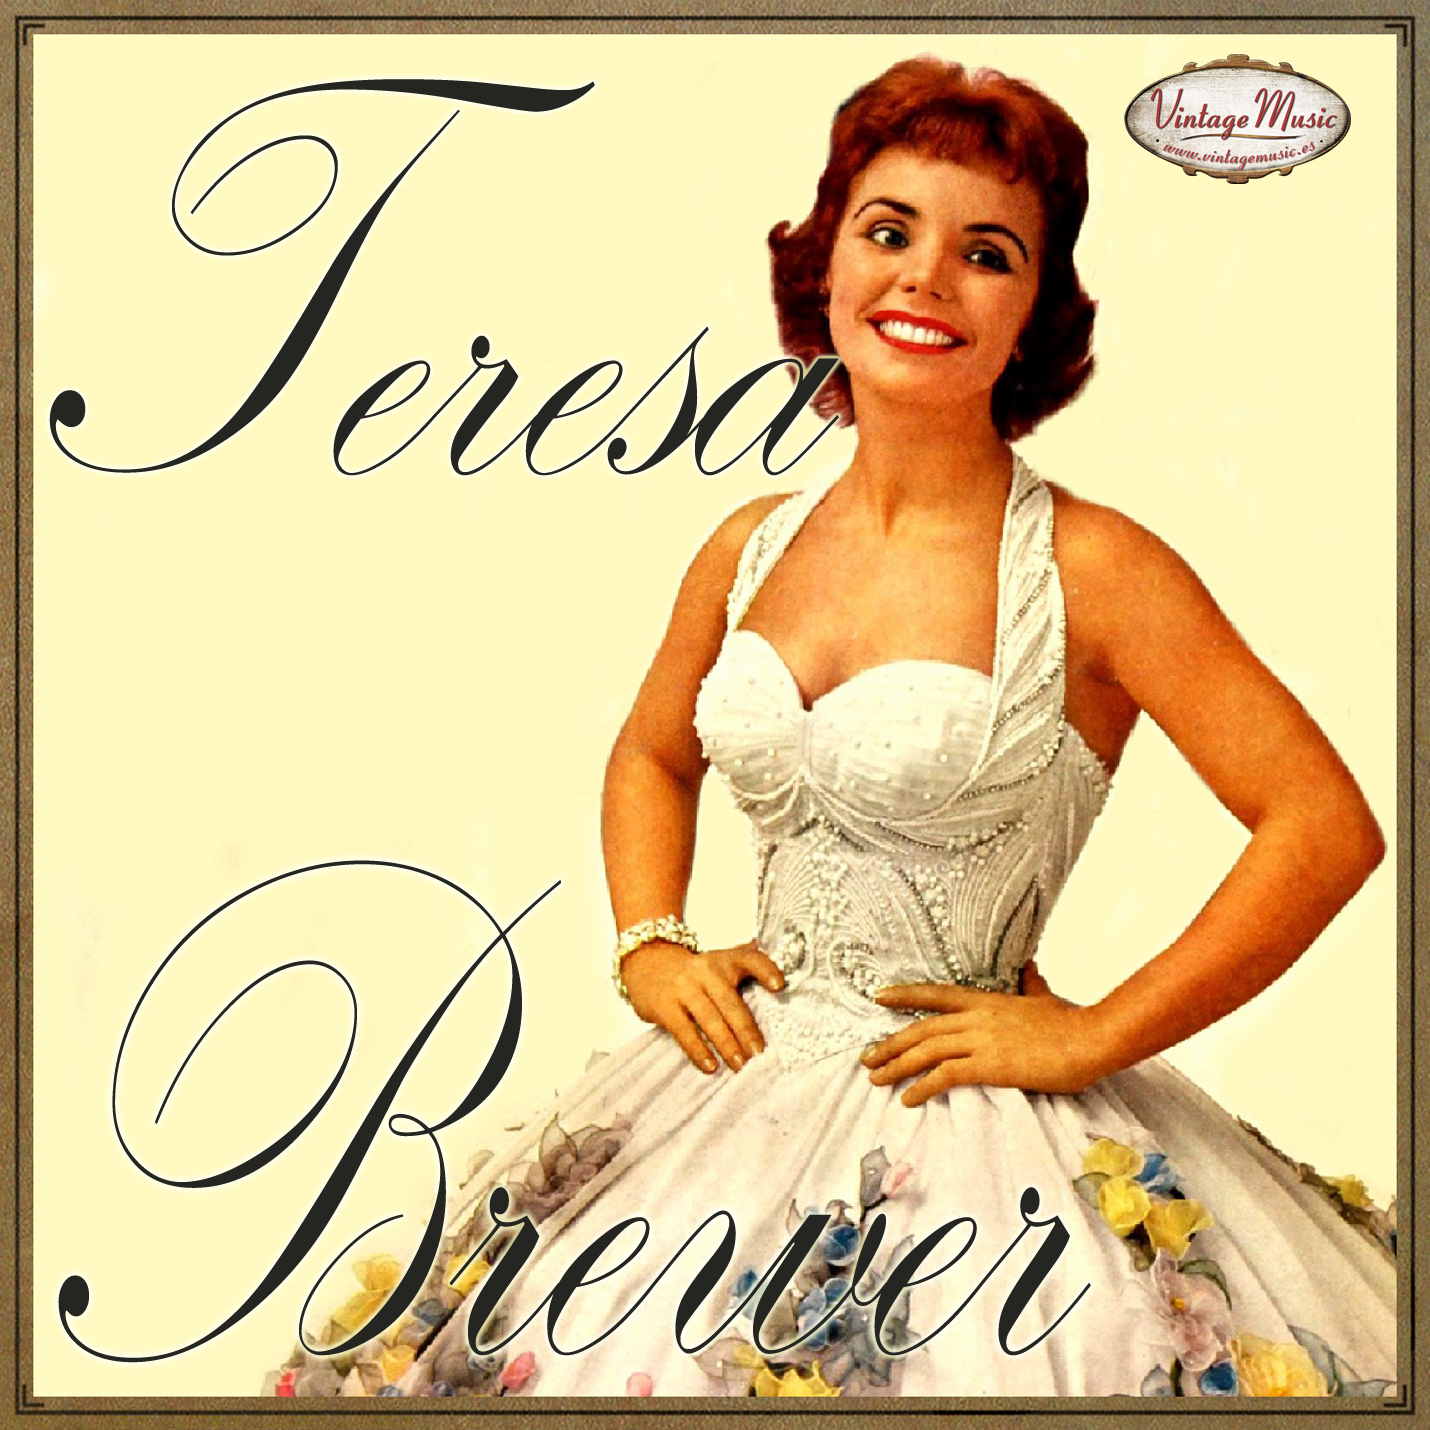 Teresa Brewer (Colección Vintage Music)